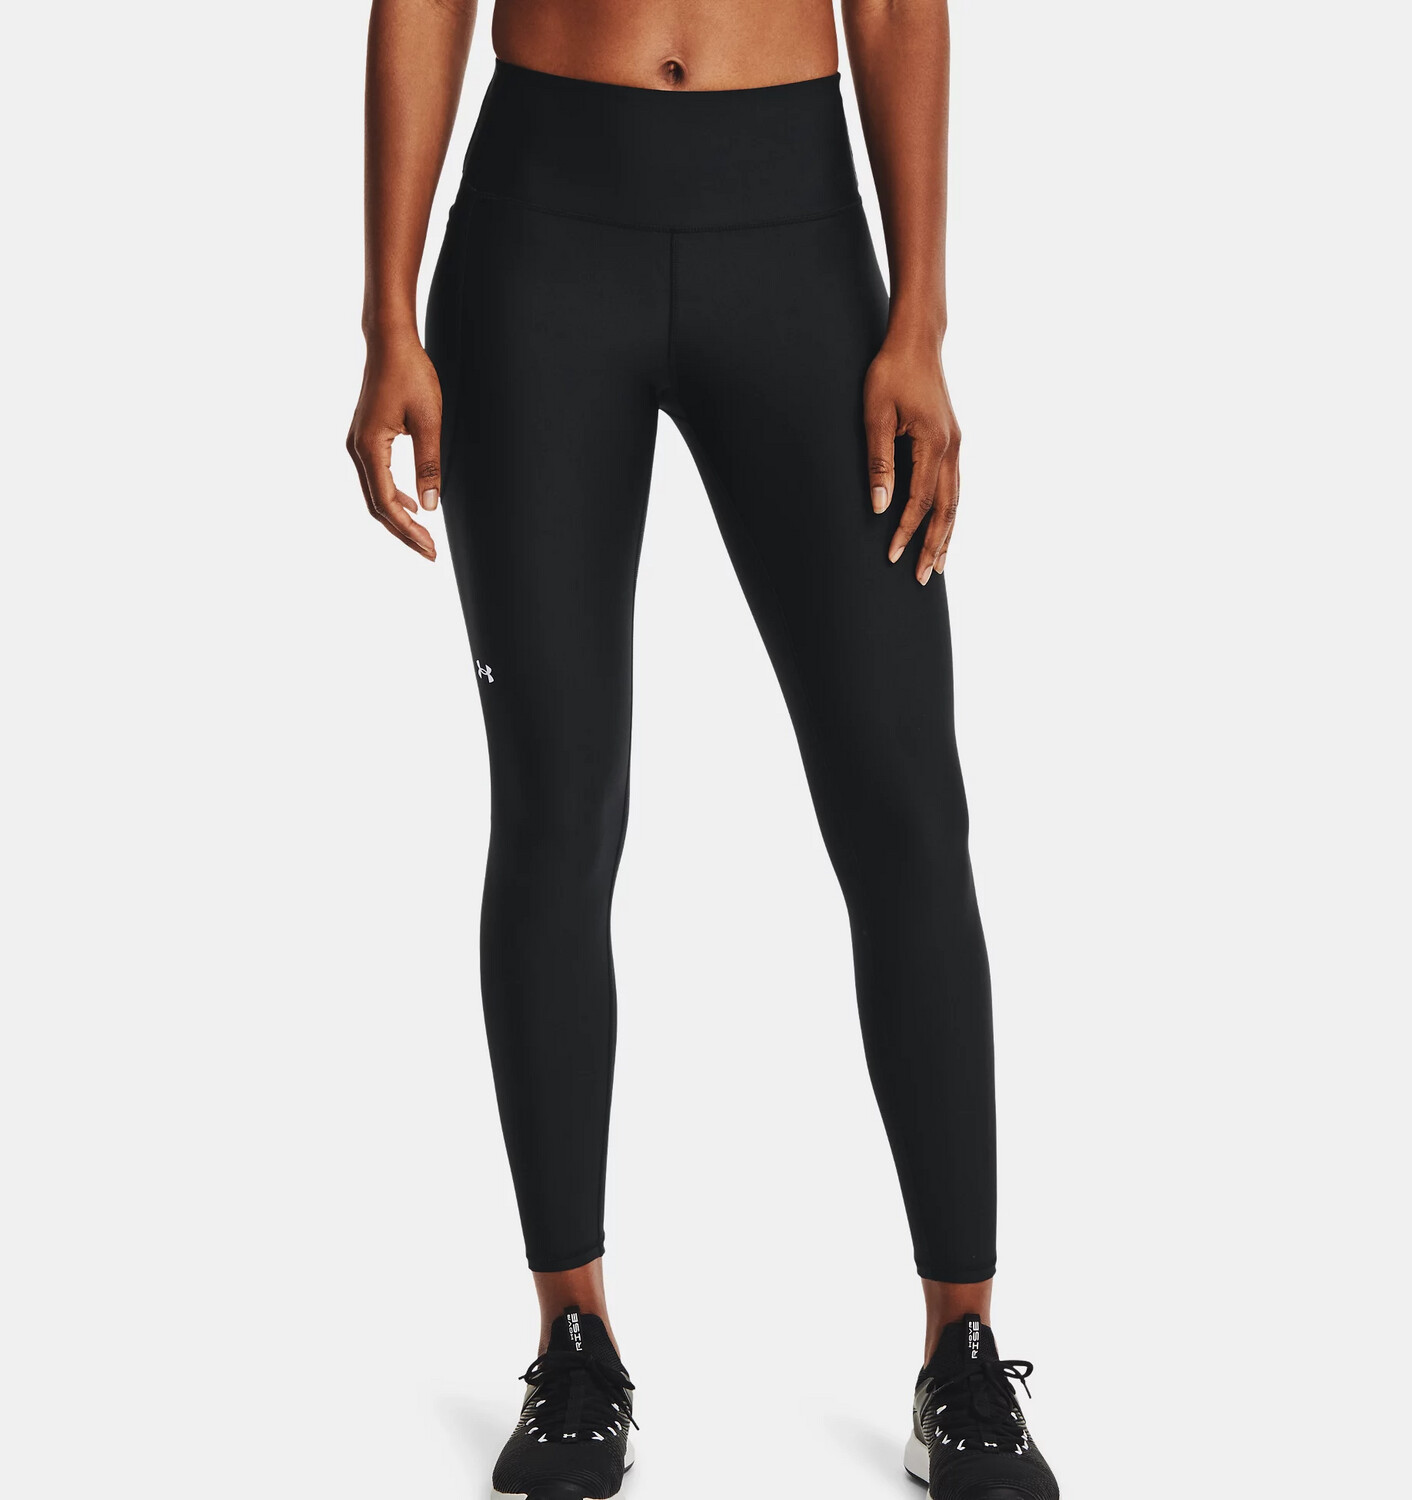 Леггинсы HeatGear "No-Slip Waistband Full-Length Leggings", Women's, Black, Under Armour